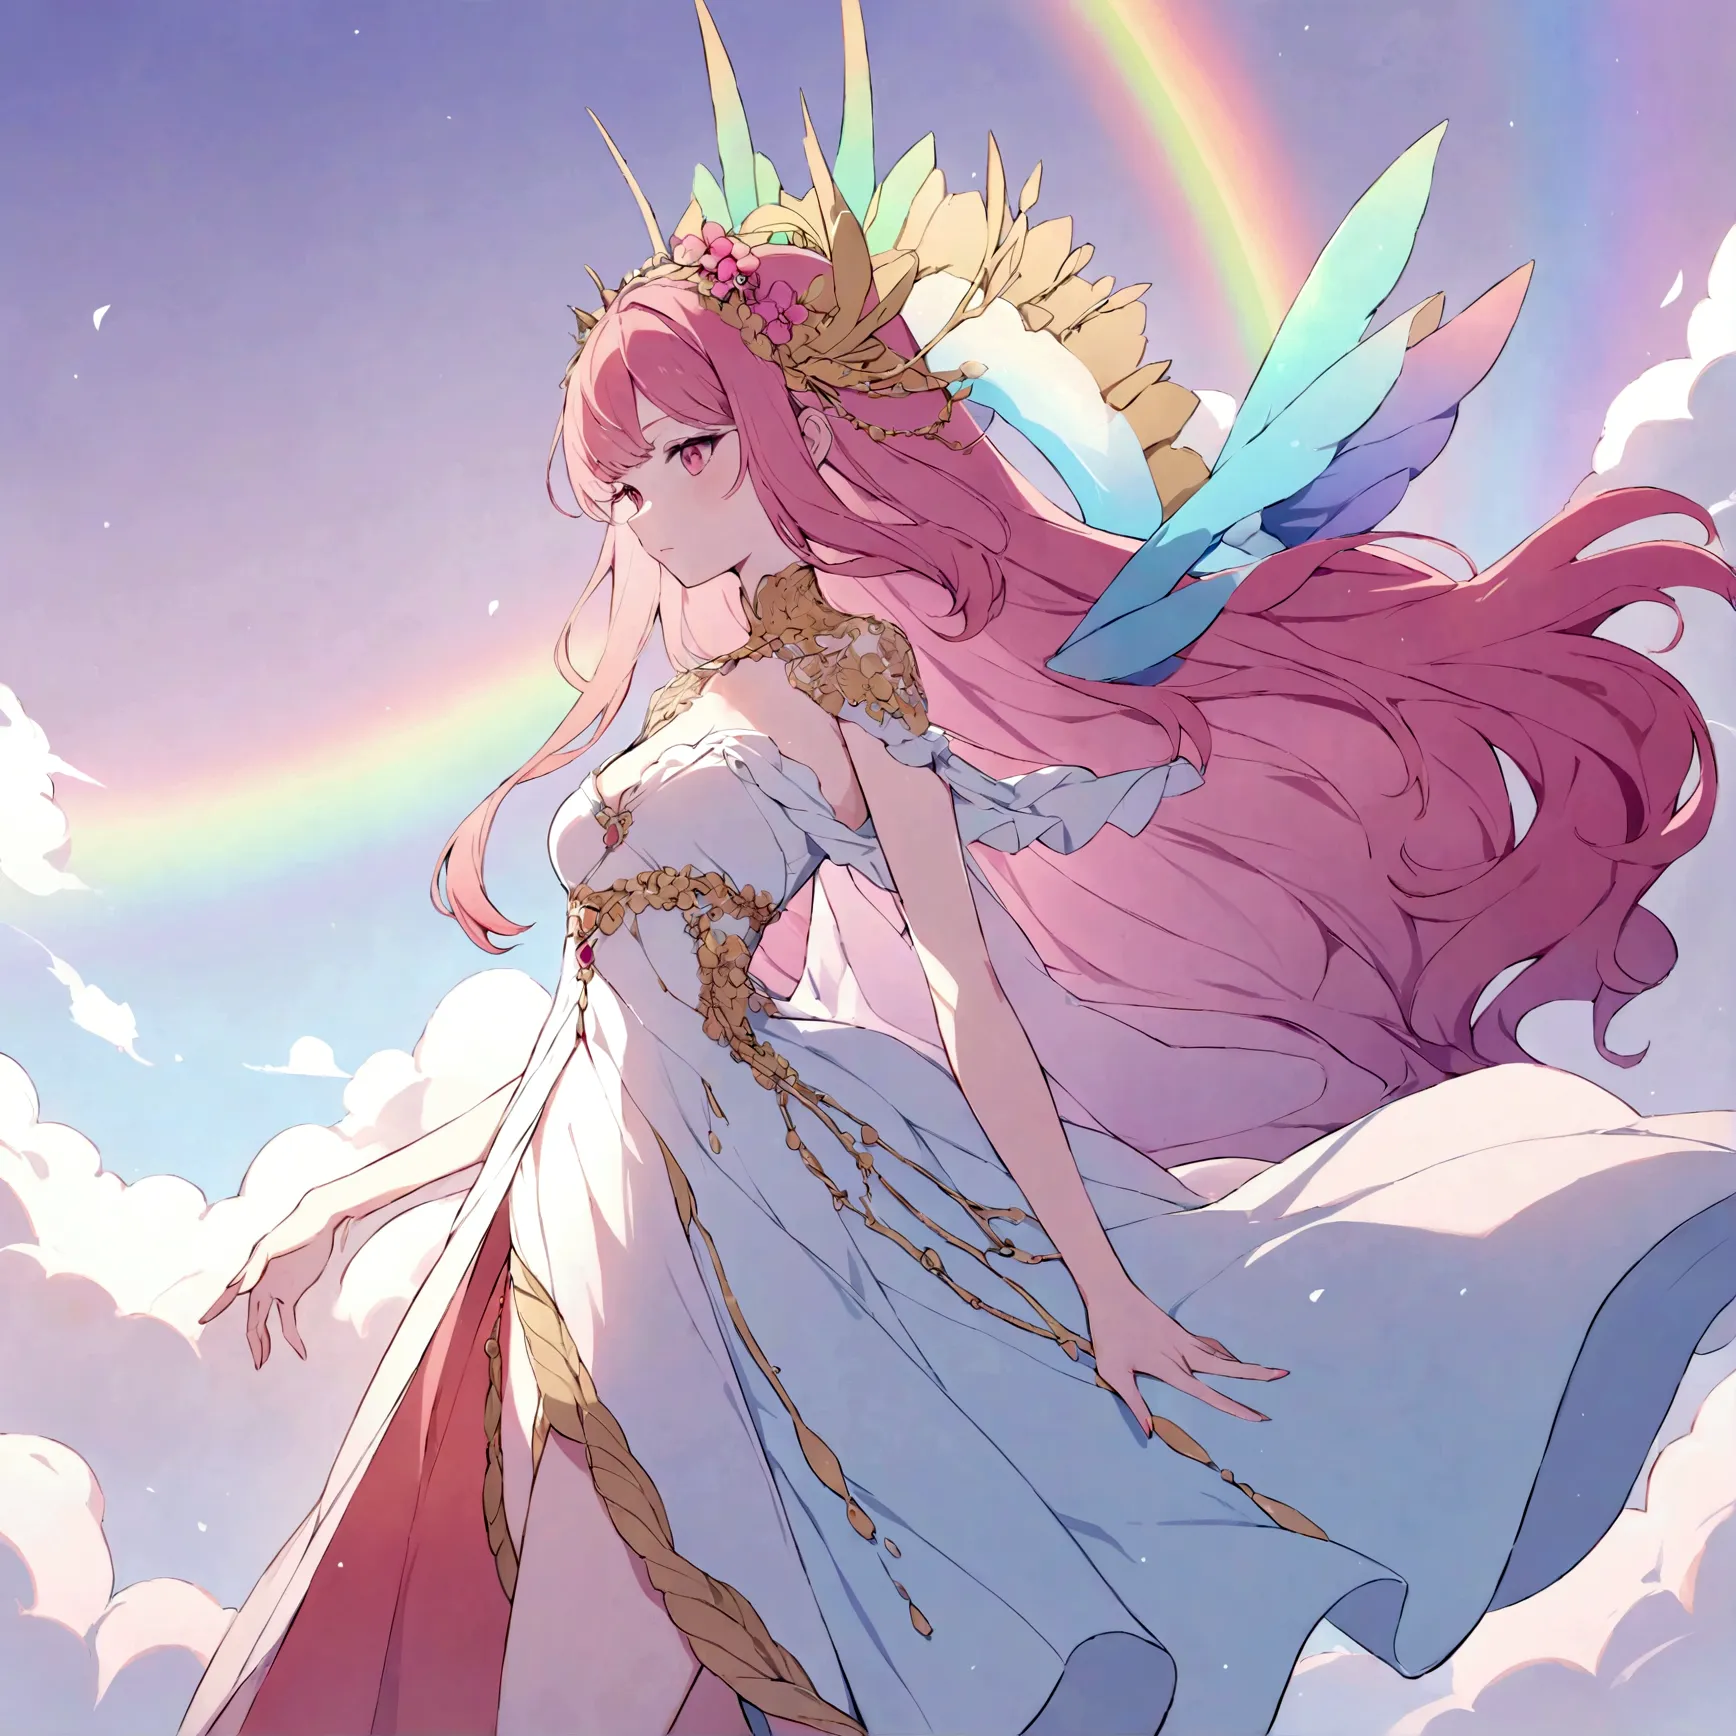 a rainbow version of goddess Persephone